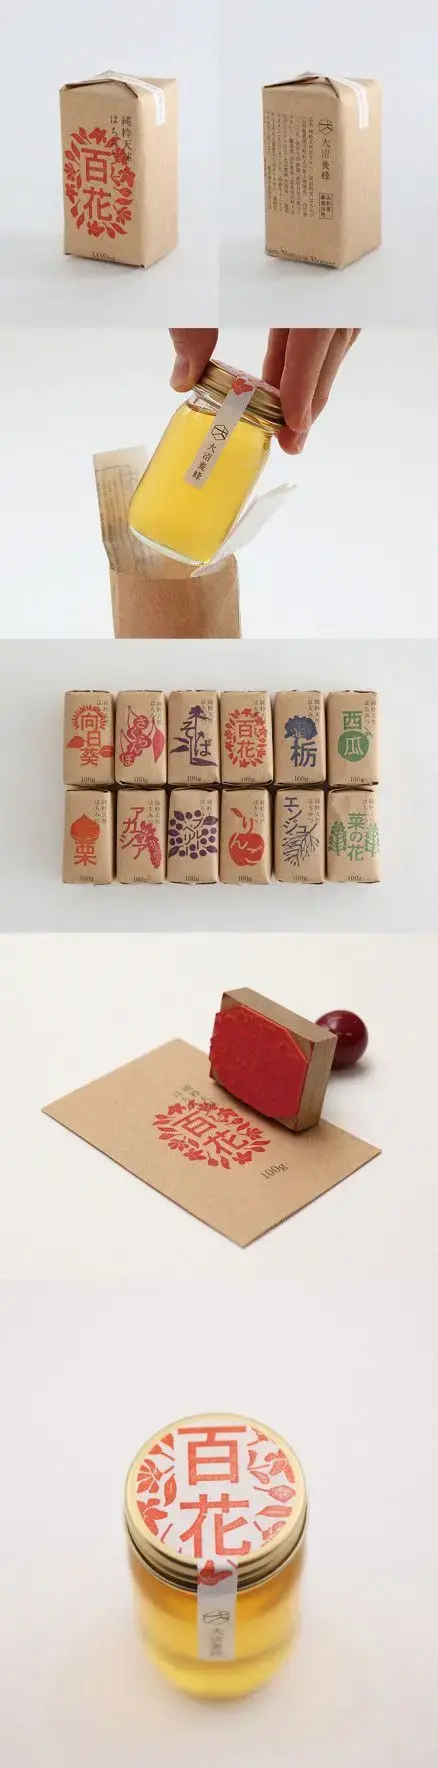 Imitating Nature: Japanese packaging design